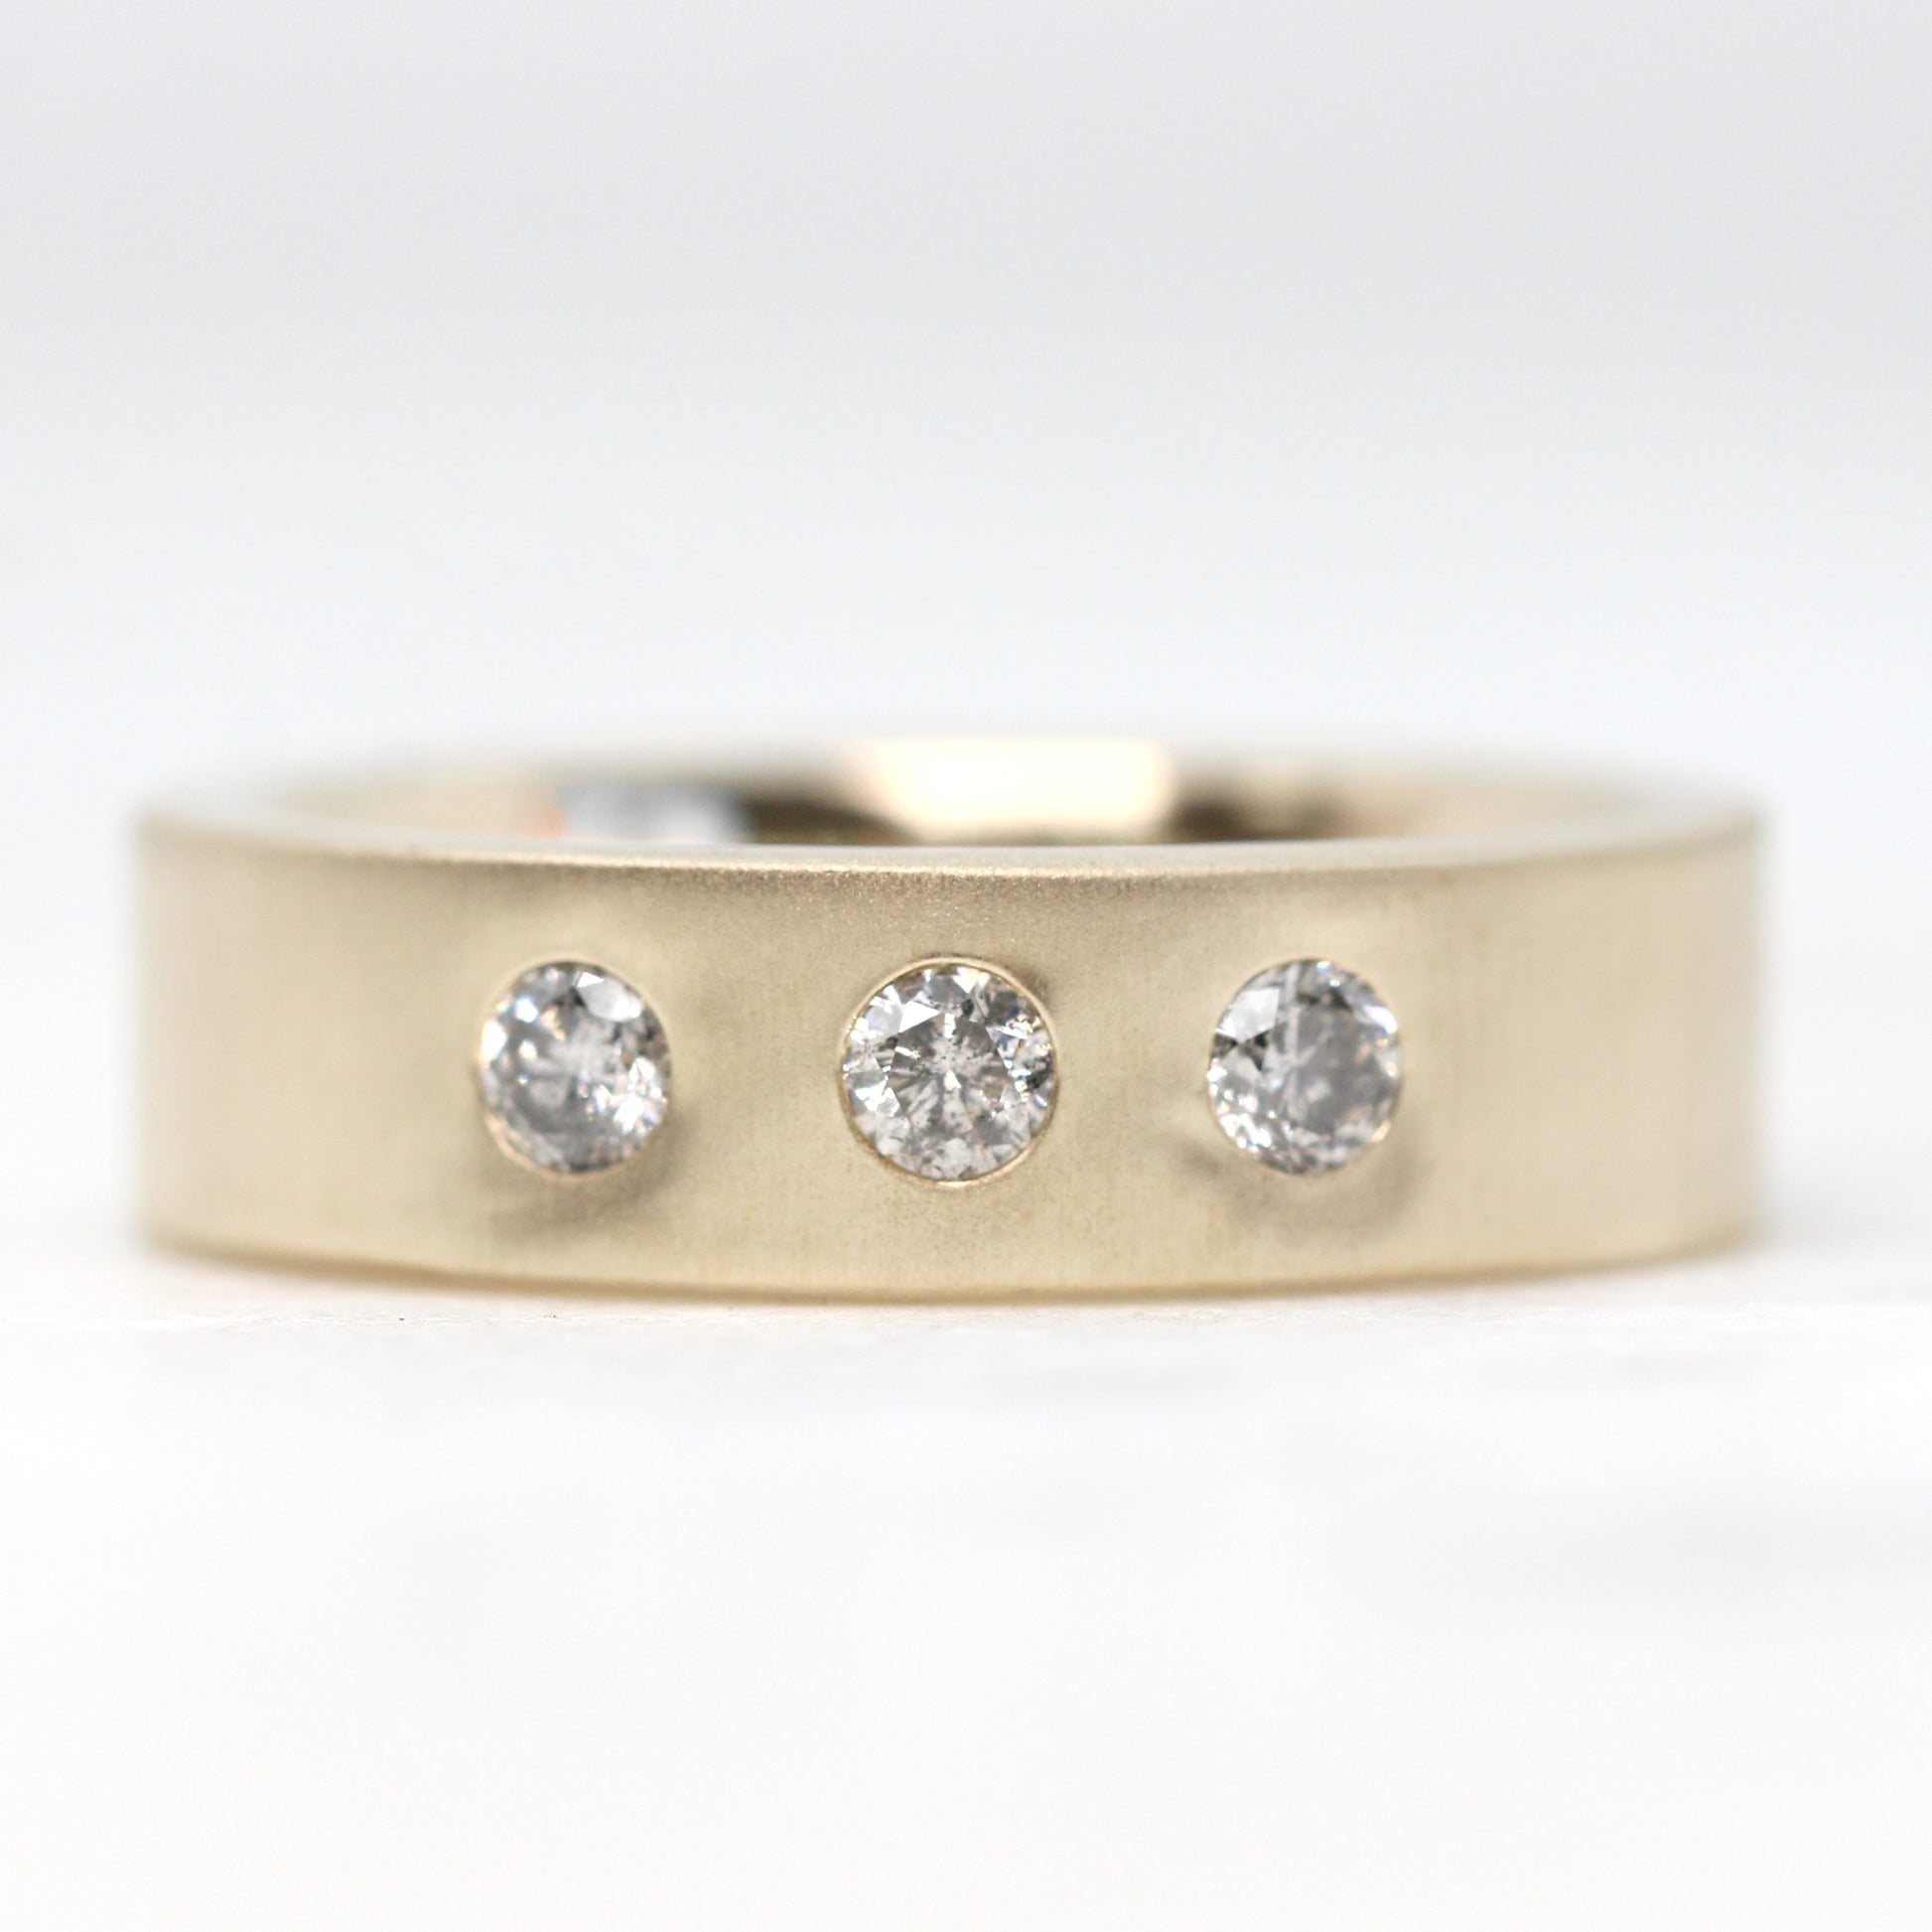 Rowan Band - Bezel Set Gray Diamond 3 Stone Anniversary / Unisex Wedding Band - Made to Order, Choose Your Gold Tone - Midwinter Co. Alternative Bridal Rings and Modern Fine Jewelry